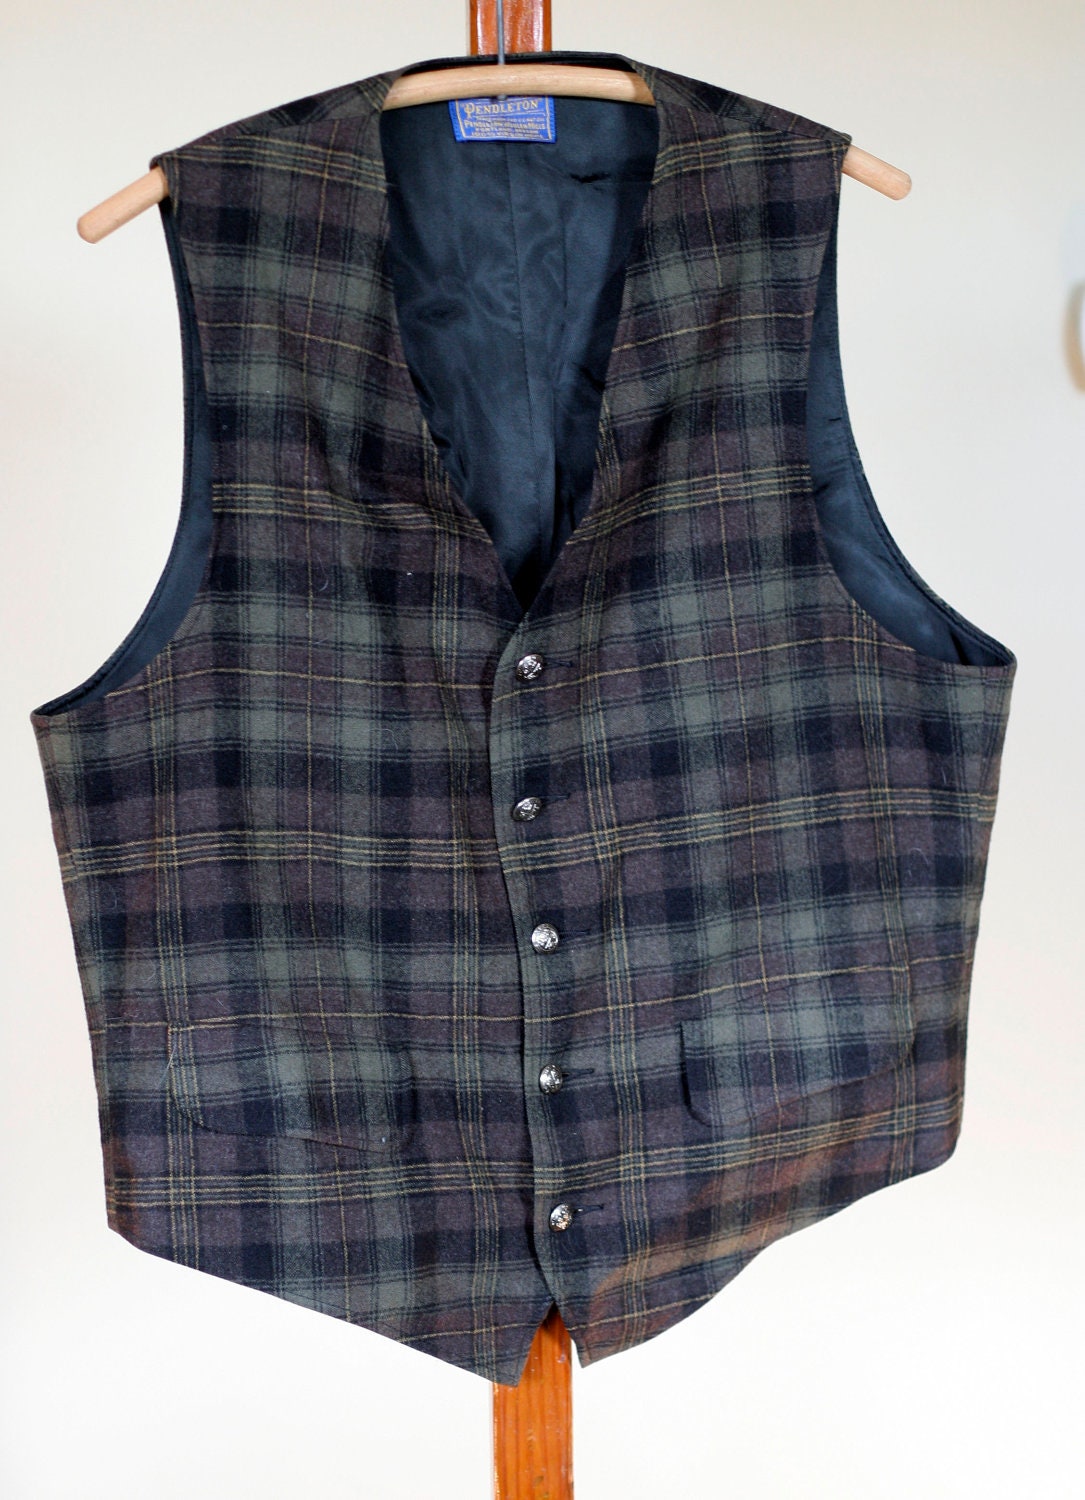 vintage pendleton mens wool plaid vest by TomTomVintage on Etsy